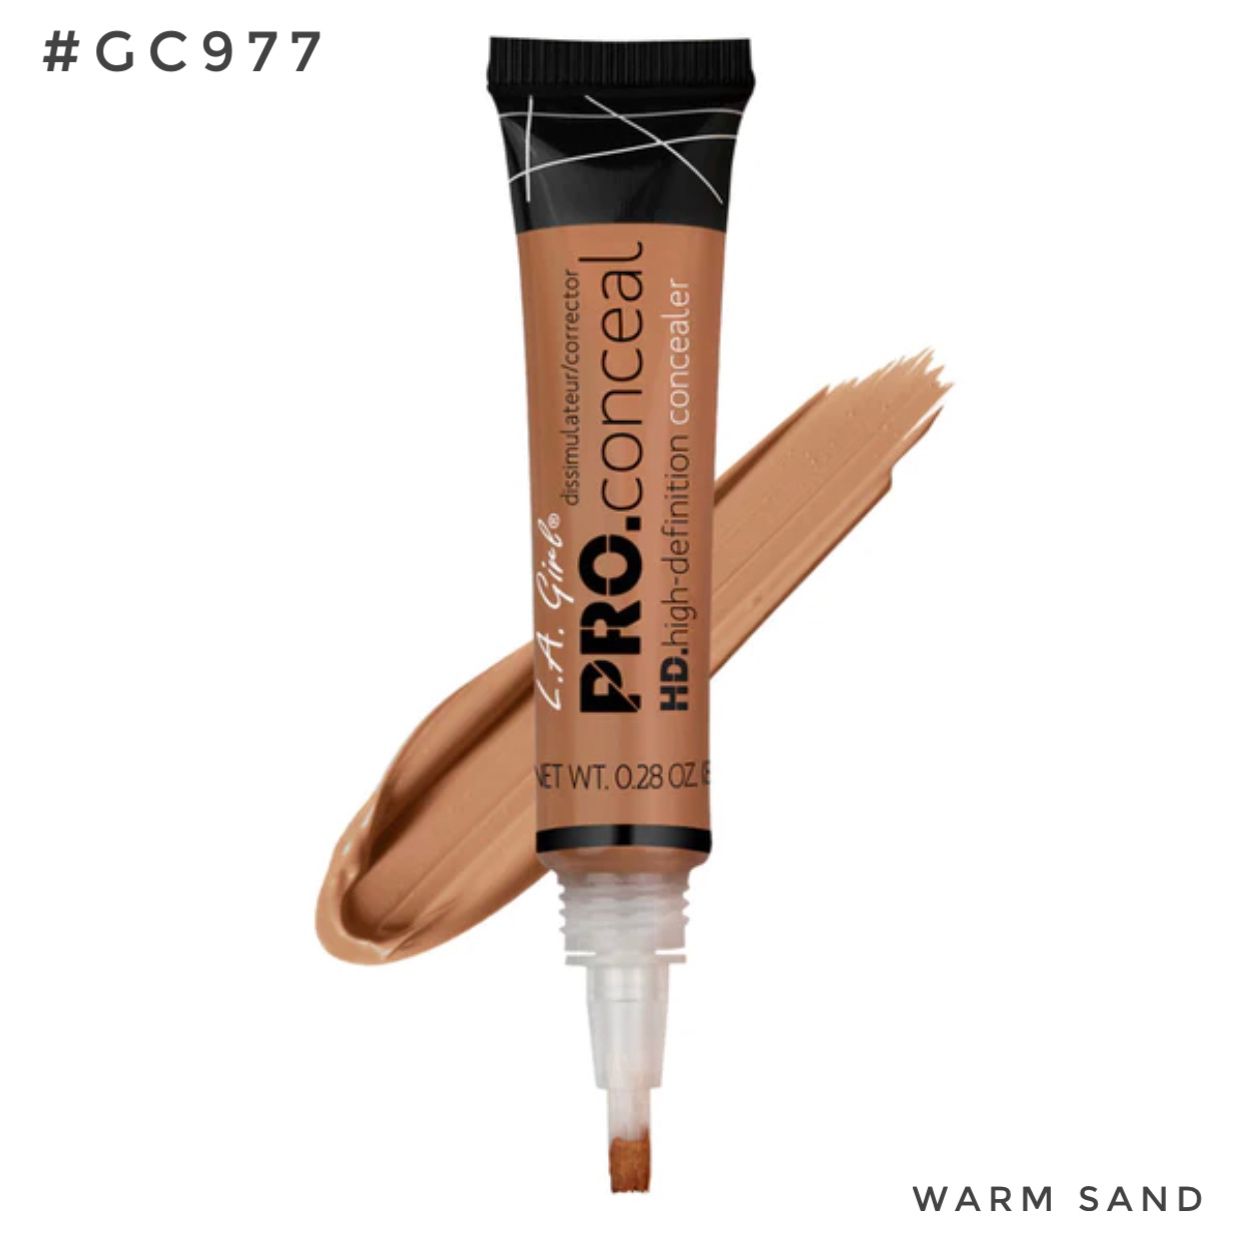 Pro HD conceal tono: warm sand